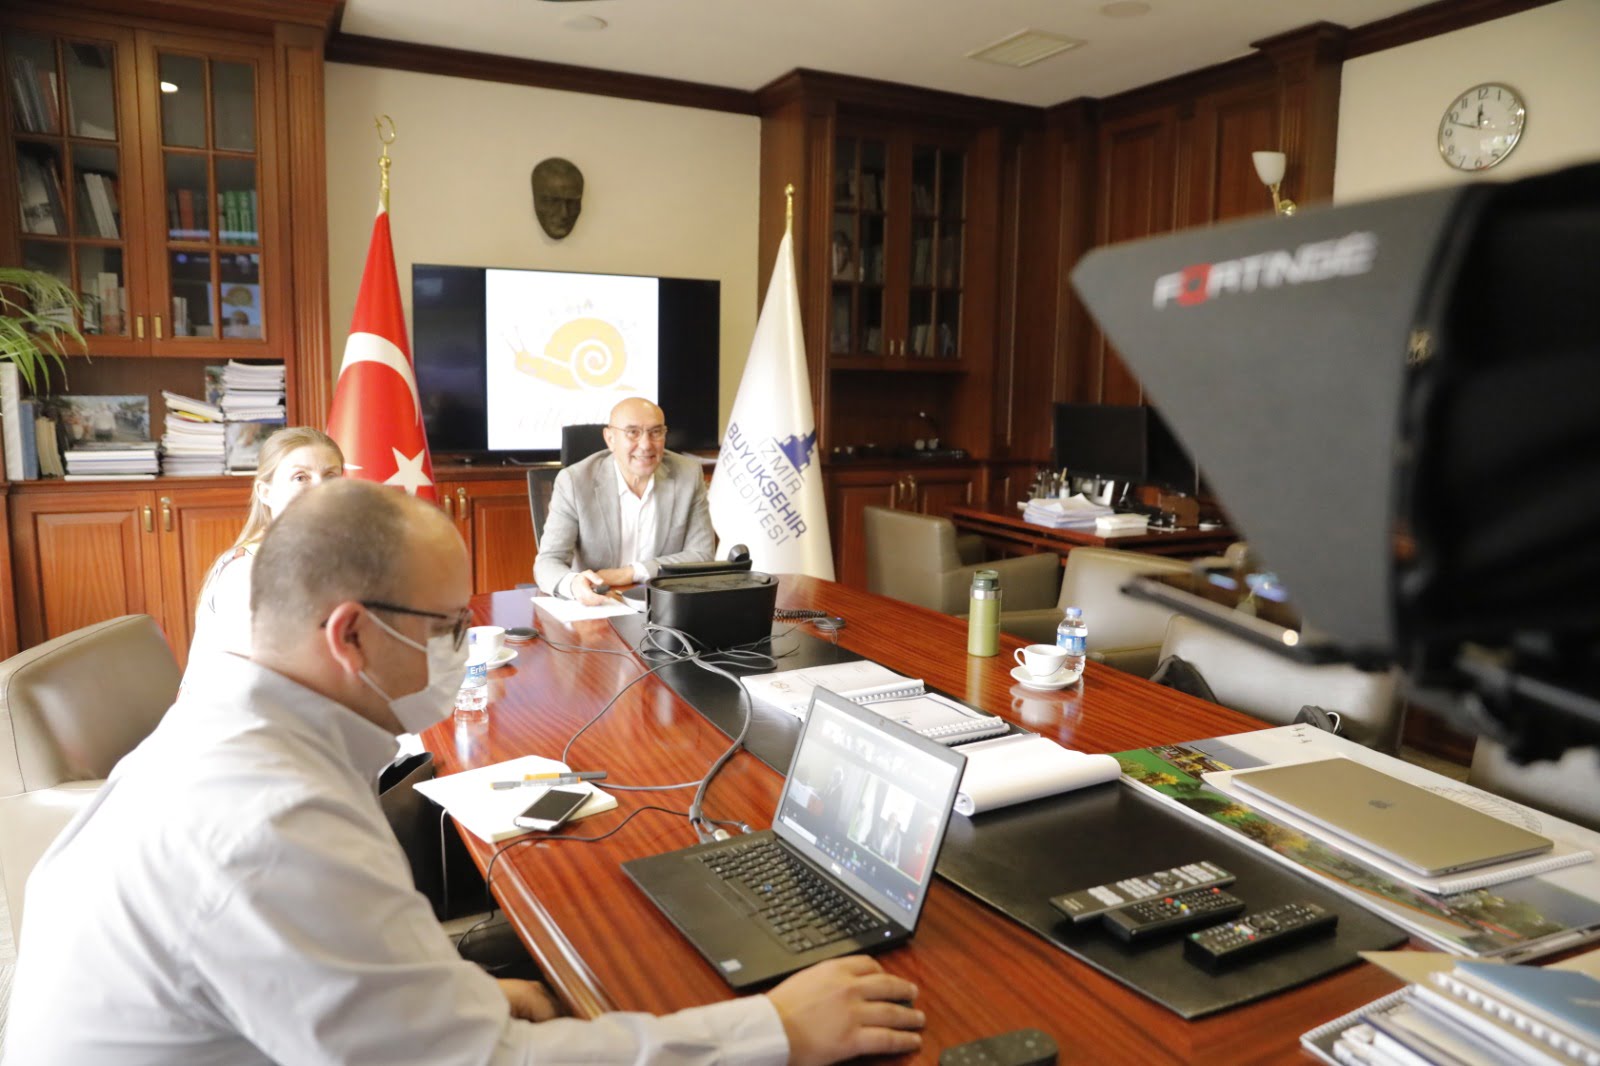 İzmir ilk "Cittaslow Metropol” olmaya aday